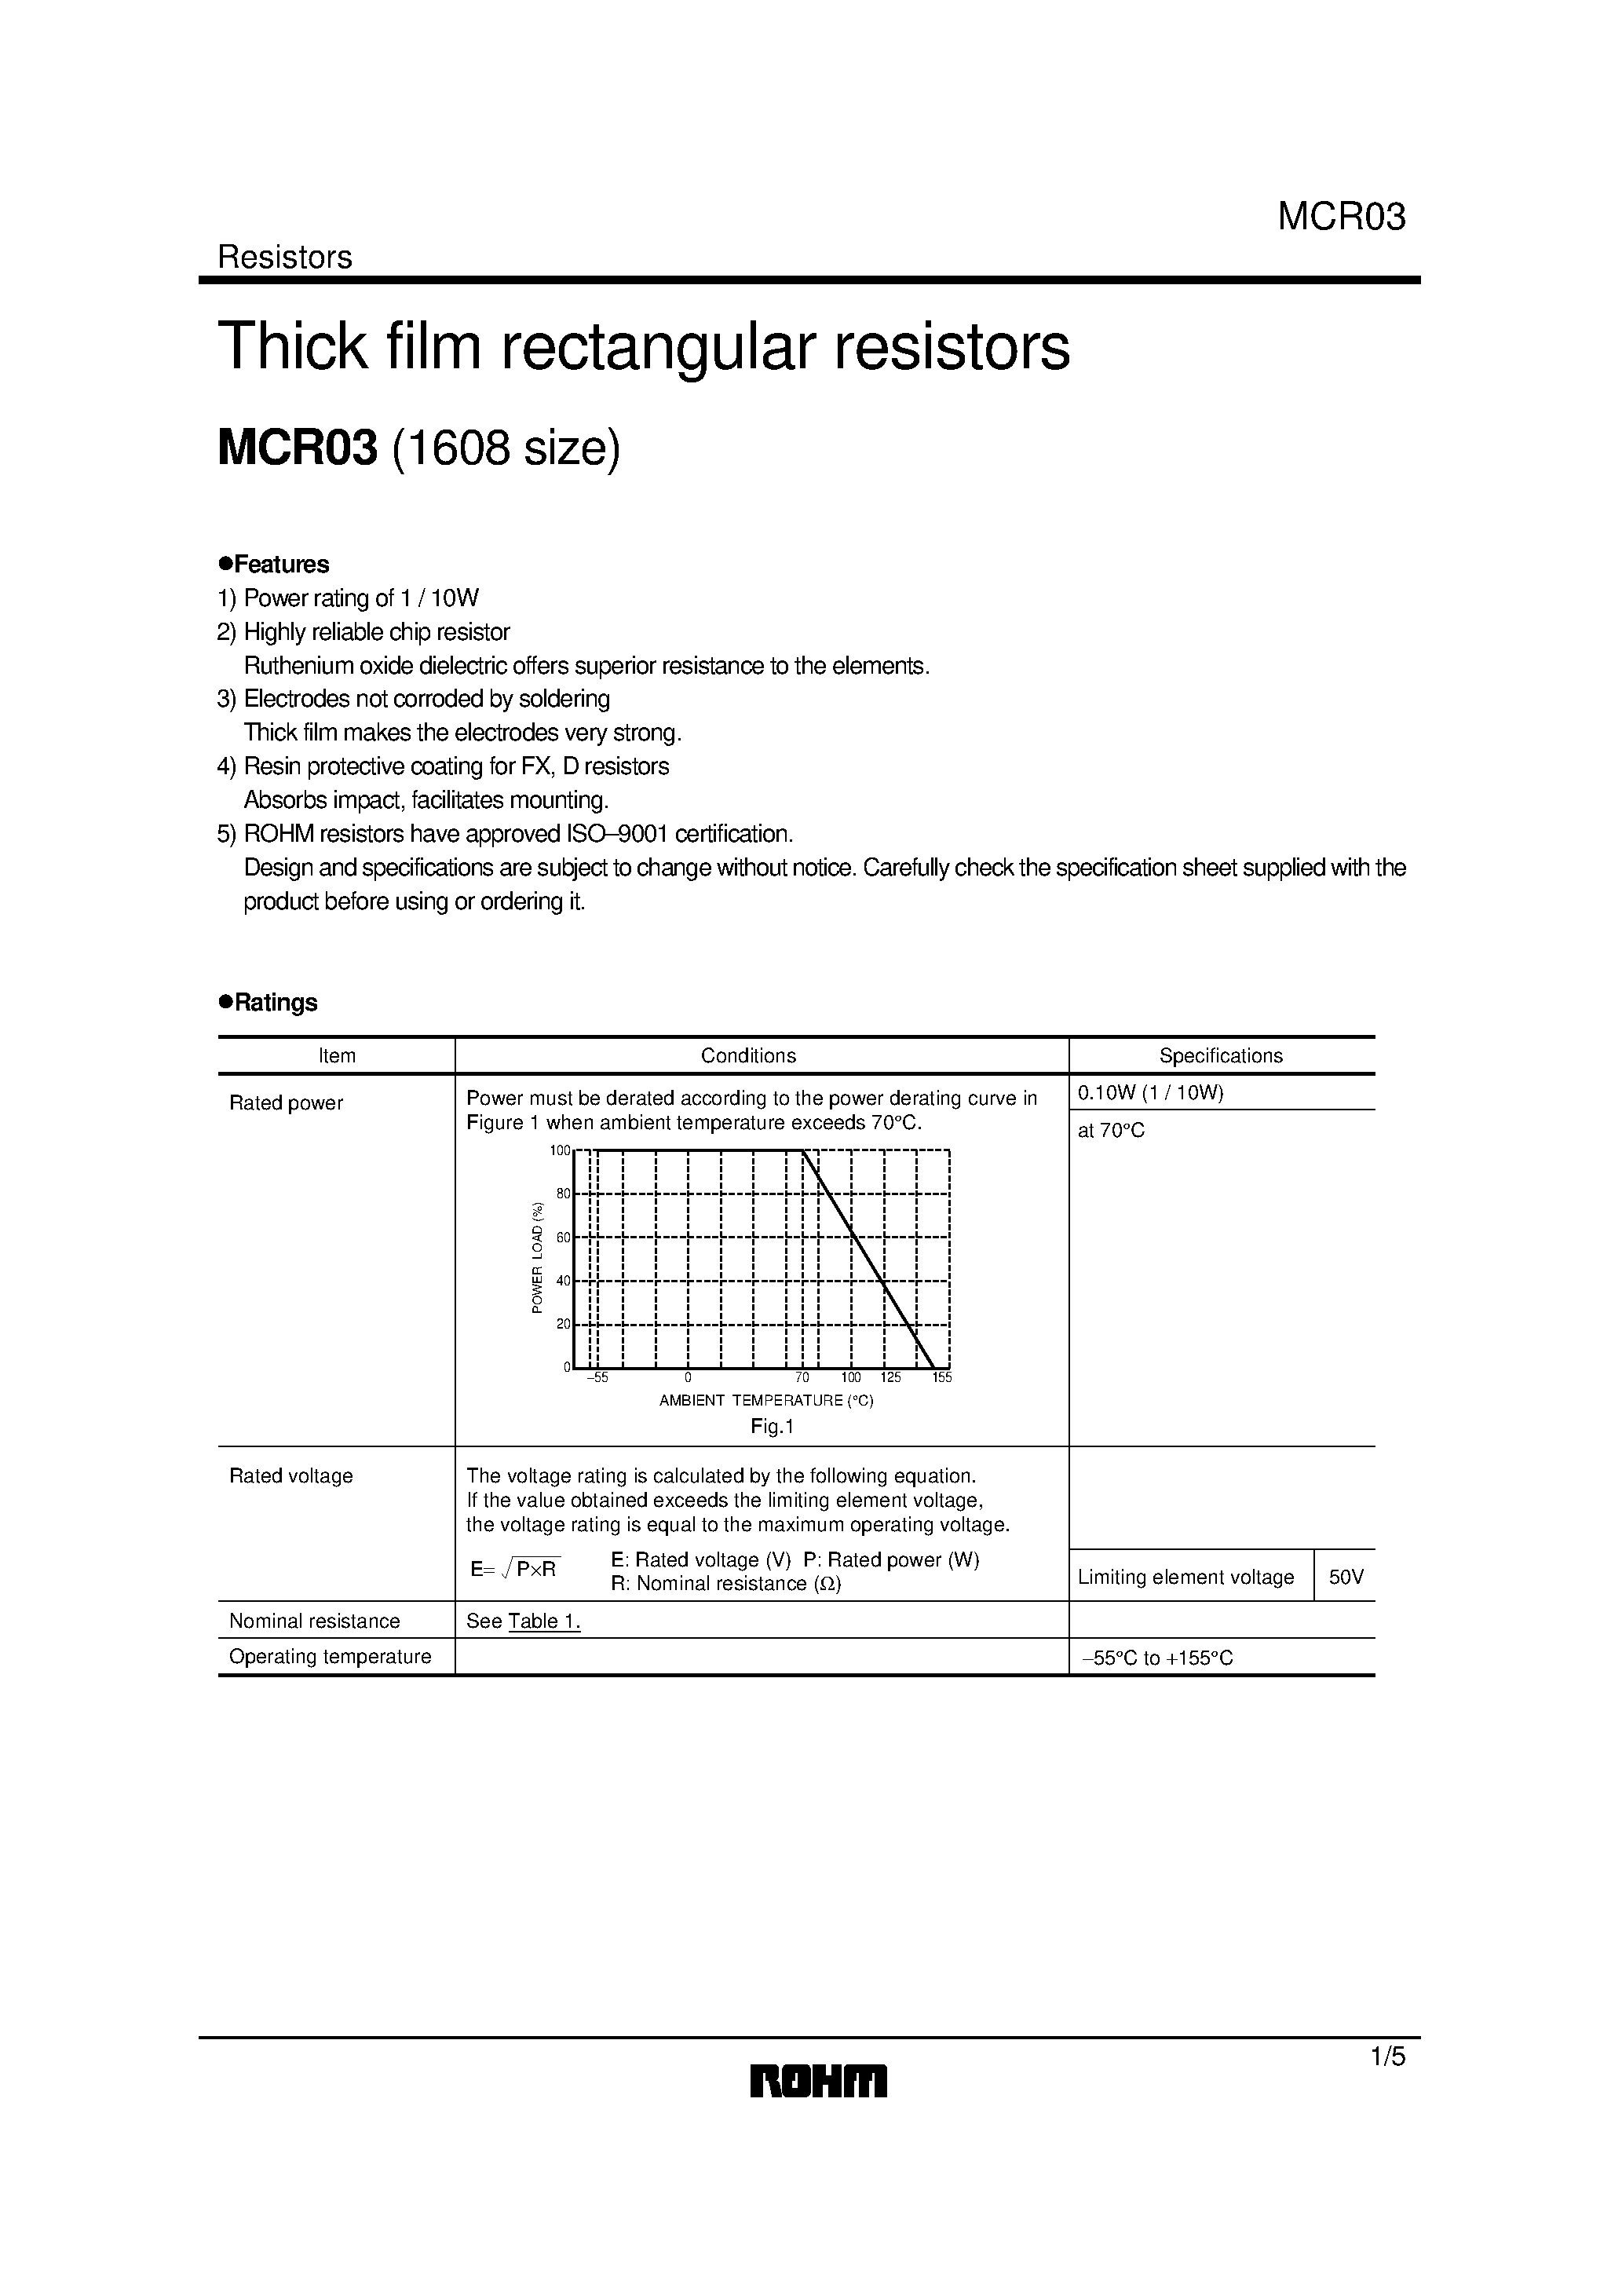 Datasheet MCR03 - Thick film rectangular resistors page 1